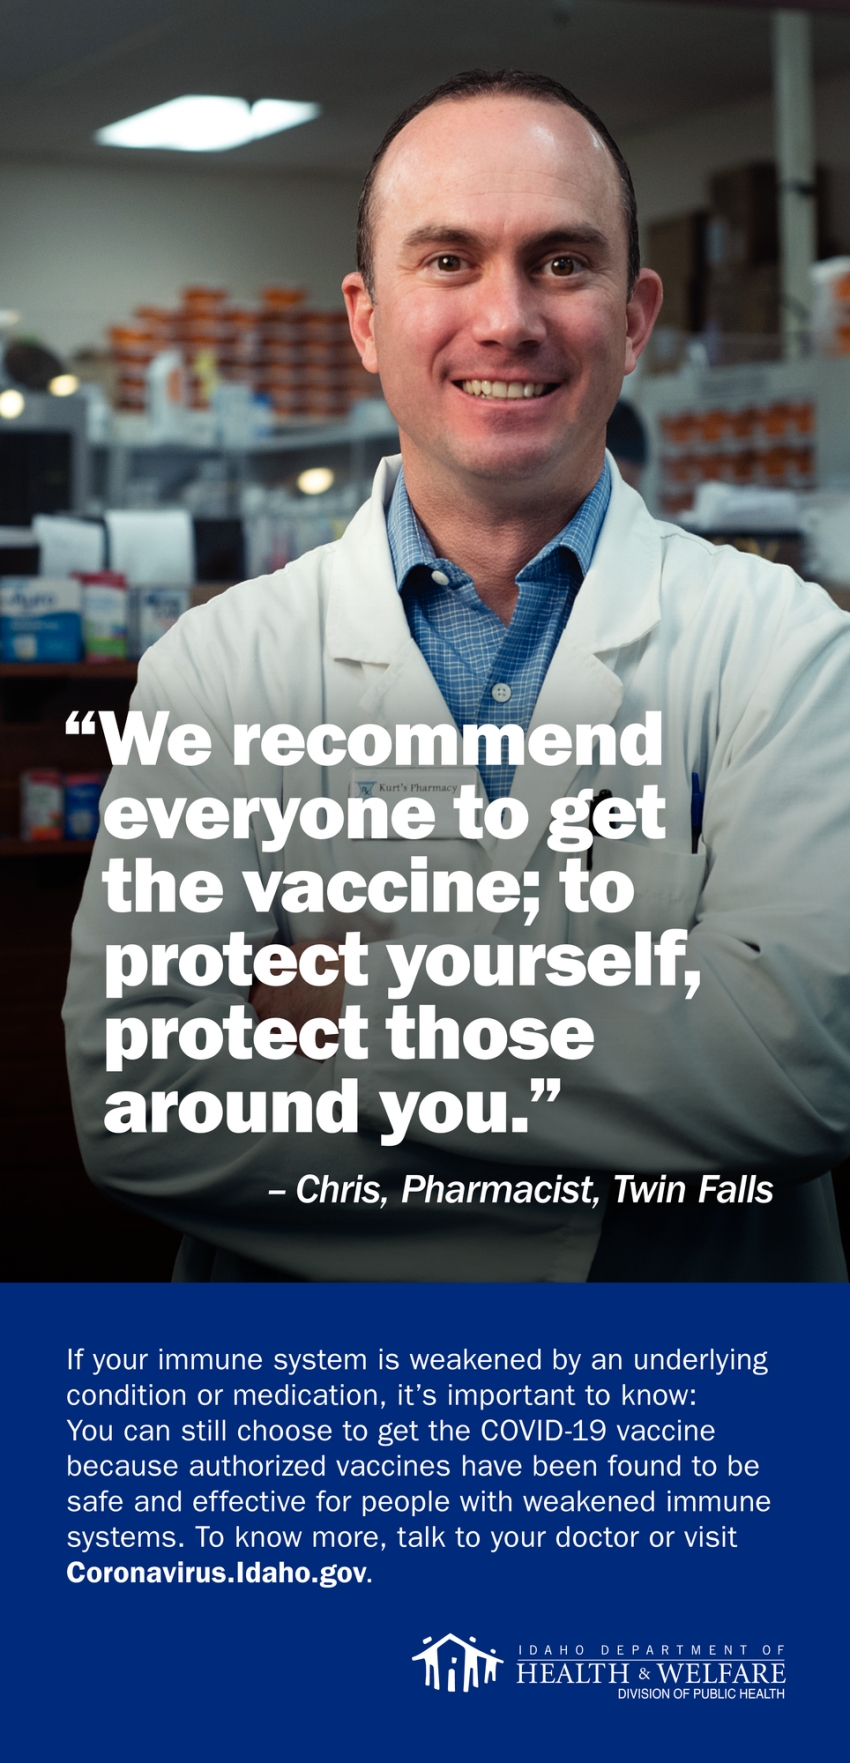 Chris, Pharmacist, Twin Falls